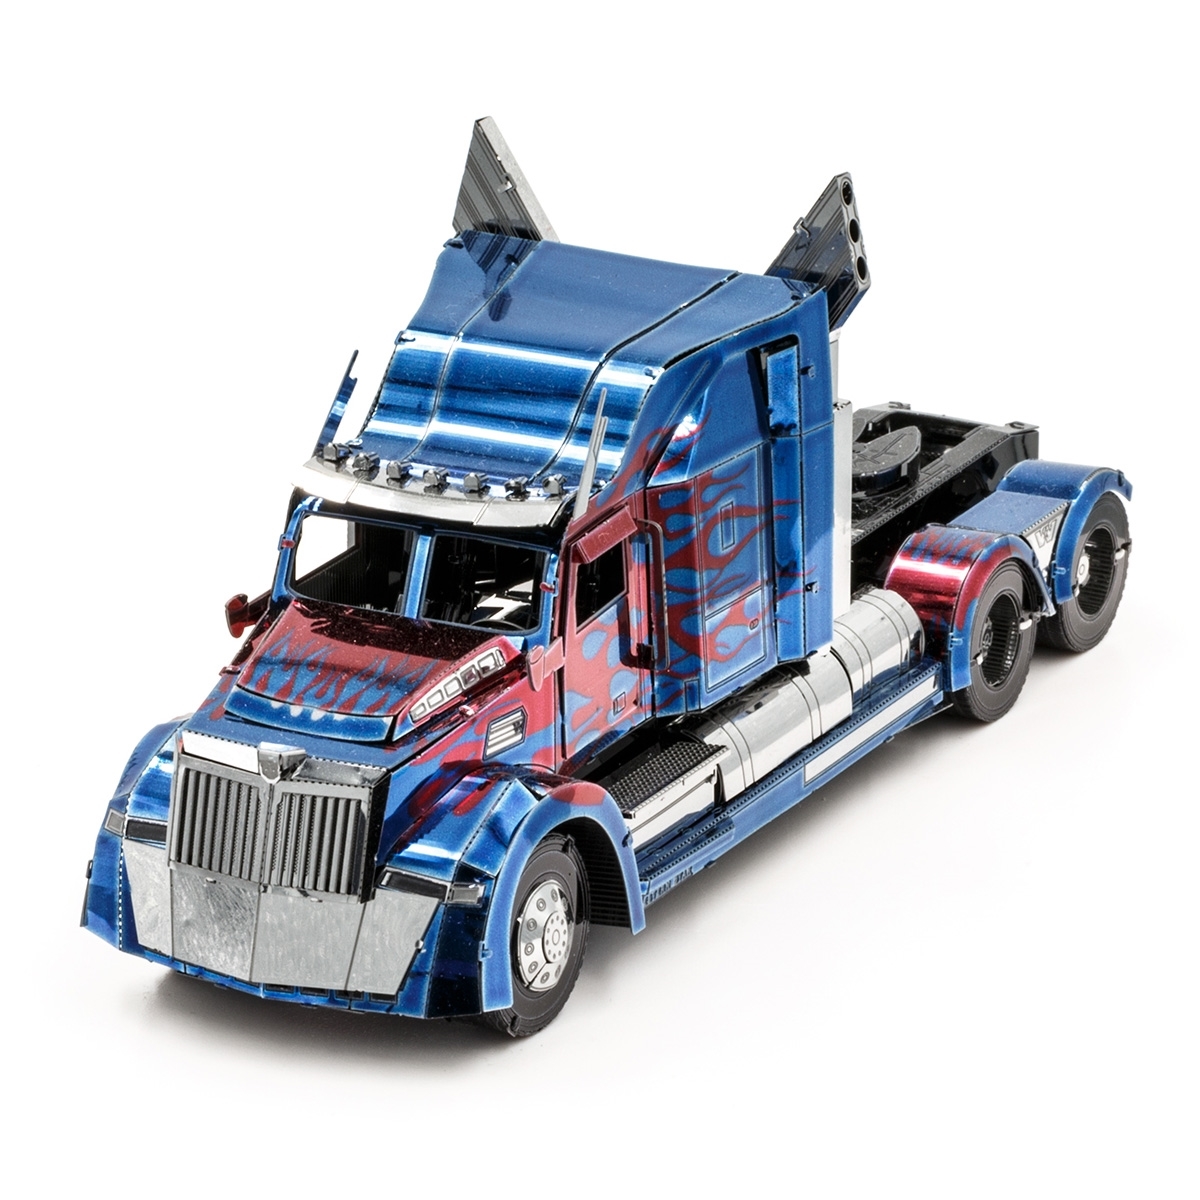 Transformers Optimus Prime Western Star 5700 Truck Laser Cut Colored Steel Model 